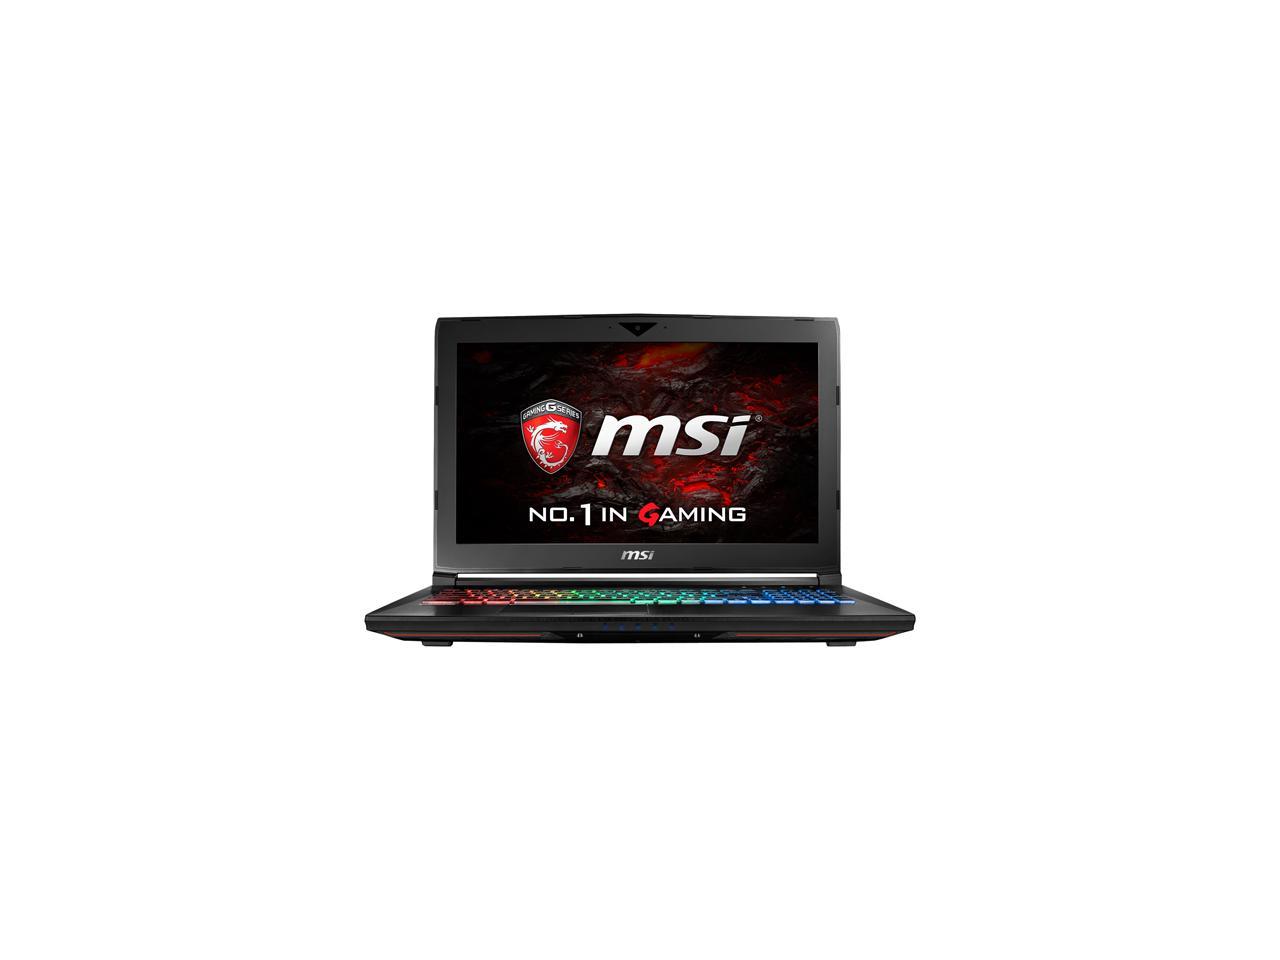 MSI 15.6" GT62VR Dominator-027 Intel Core i7 6700HQ (2.60 GHz) NVIDIA